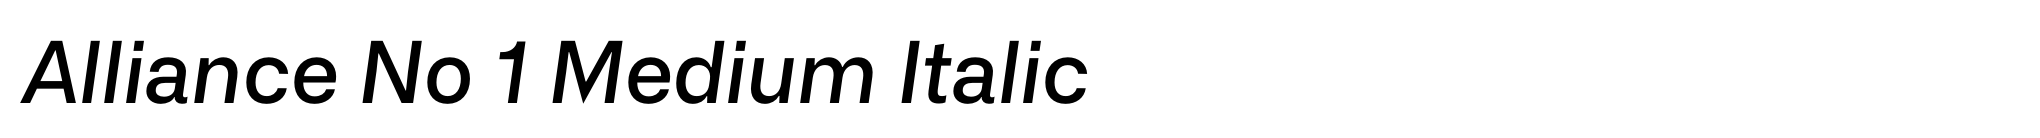 Alliance No 1 Medium Italic image